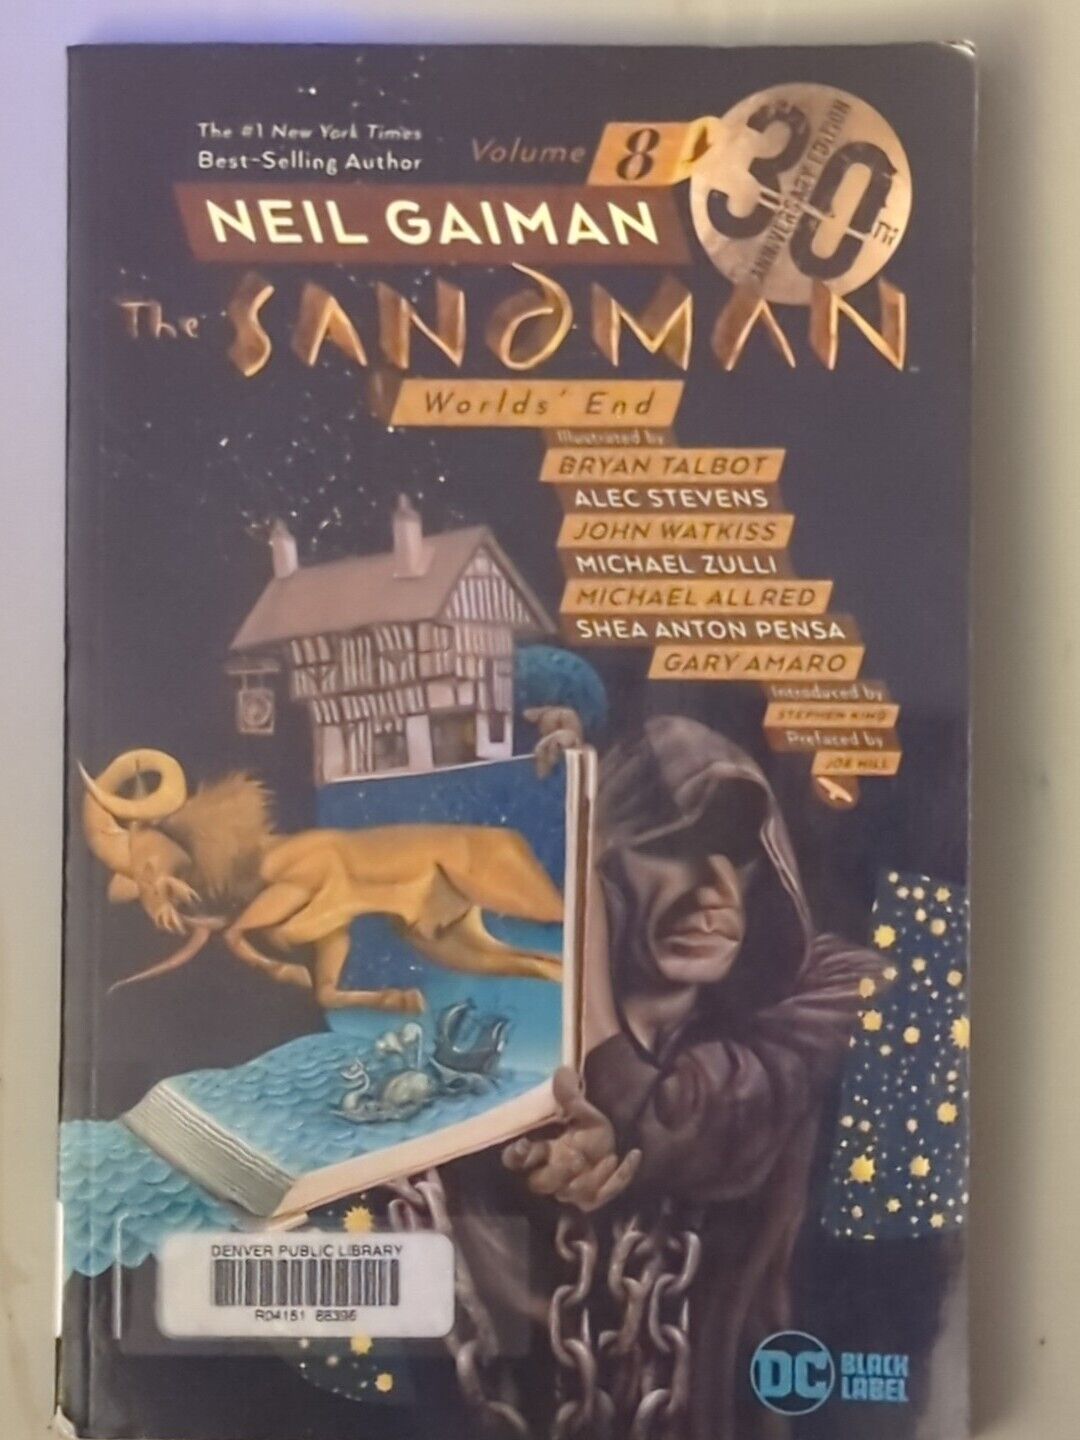 The Sandman #8 (DC Comics, July 2019)